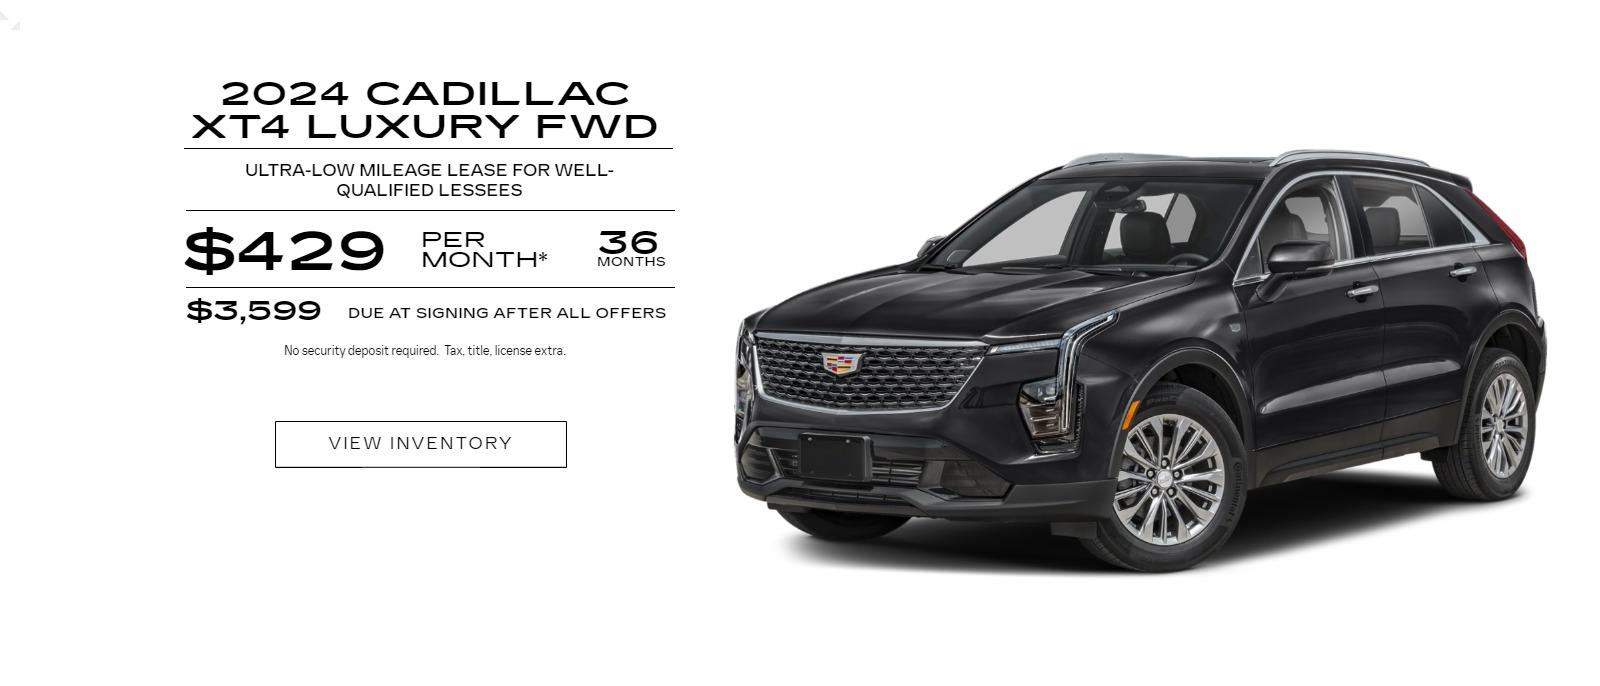 2024 Cadillac XT4 FWD Luxury Lease Offer